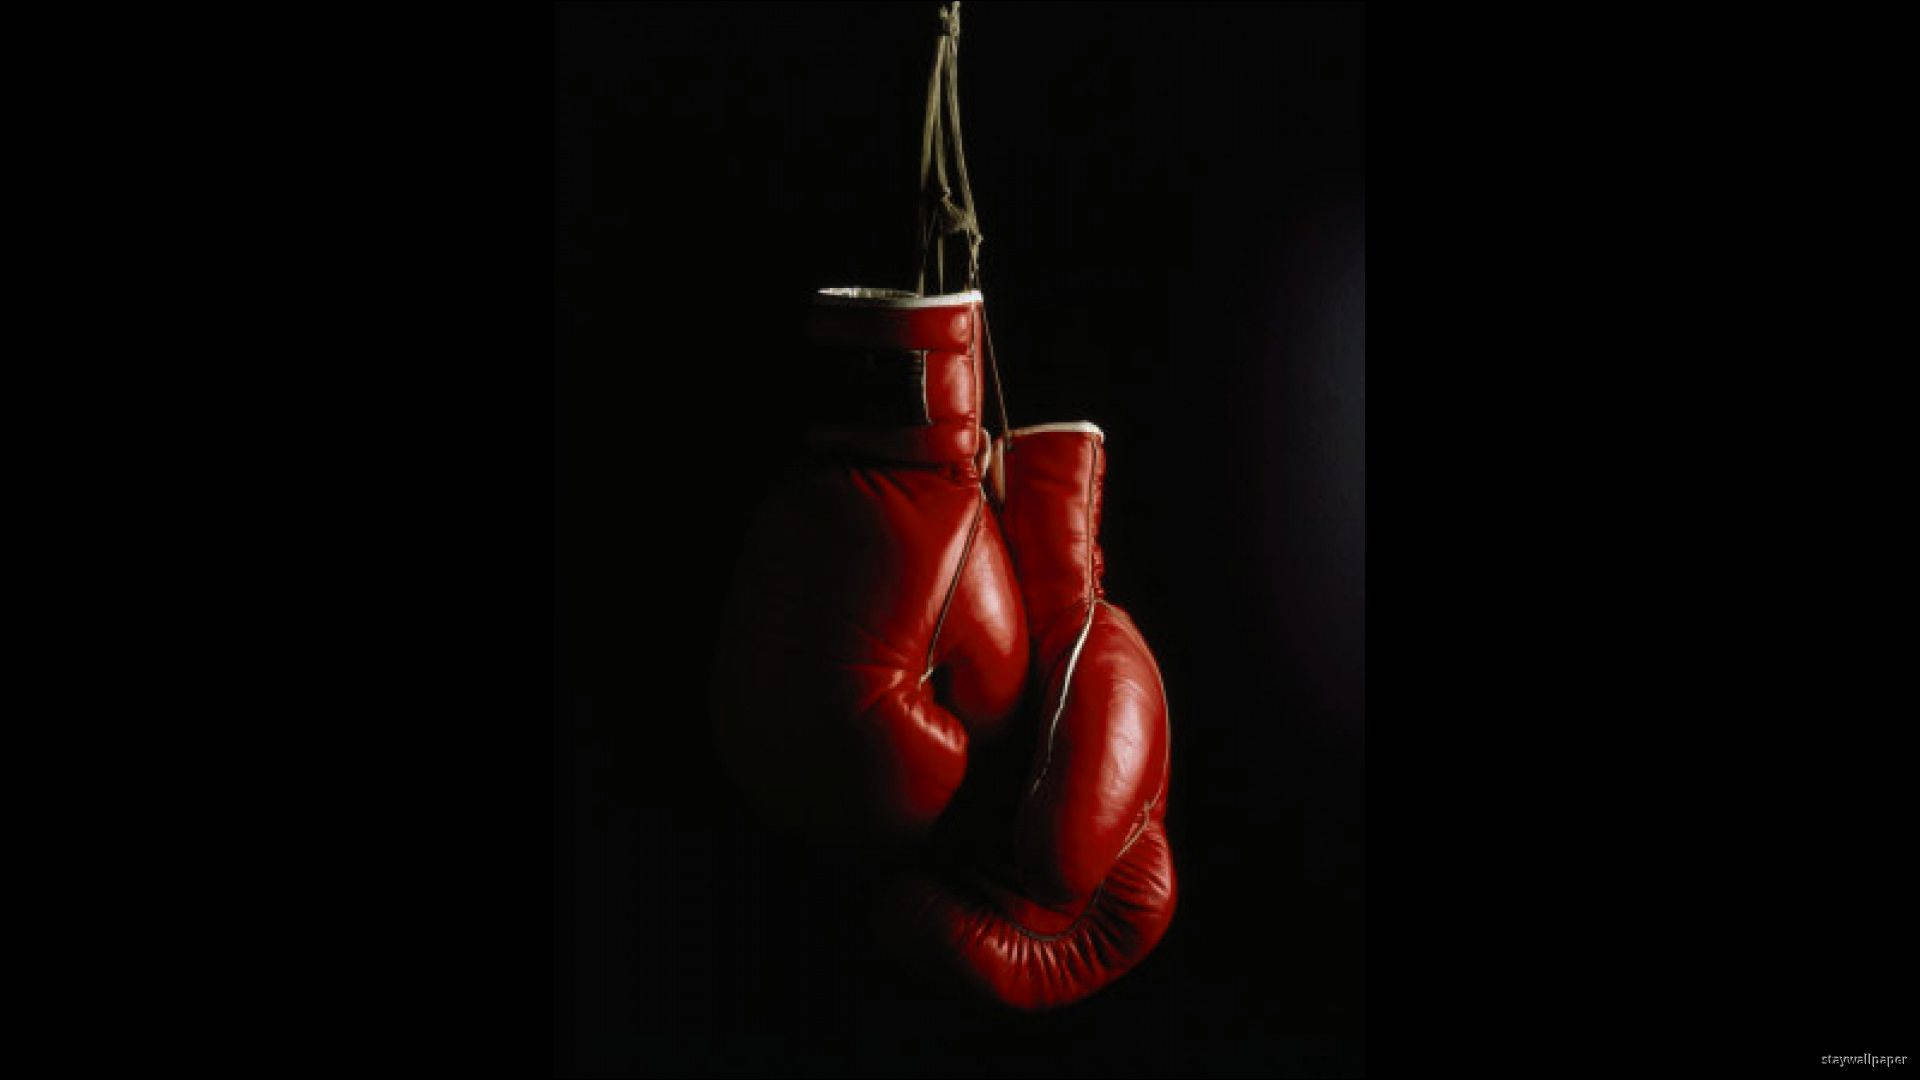 hanging boxing gloves black background